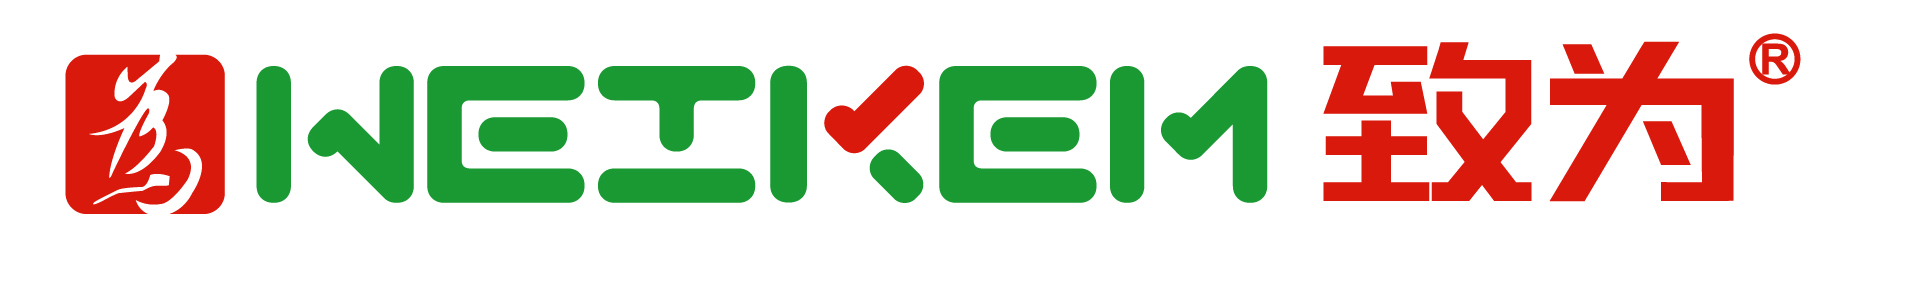 WeiKem Chemical Co., Ltd._logo